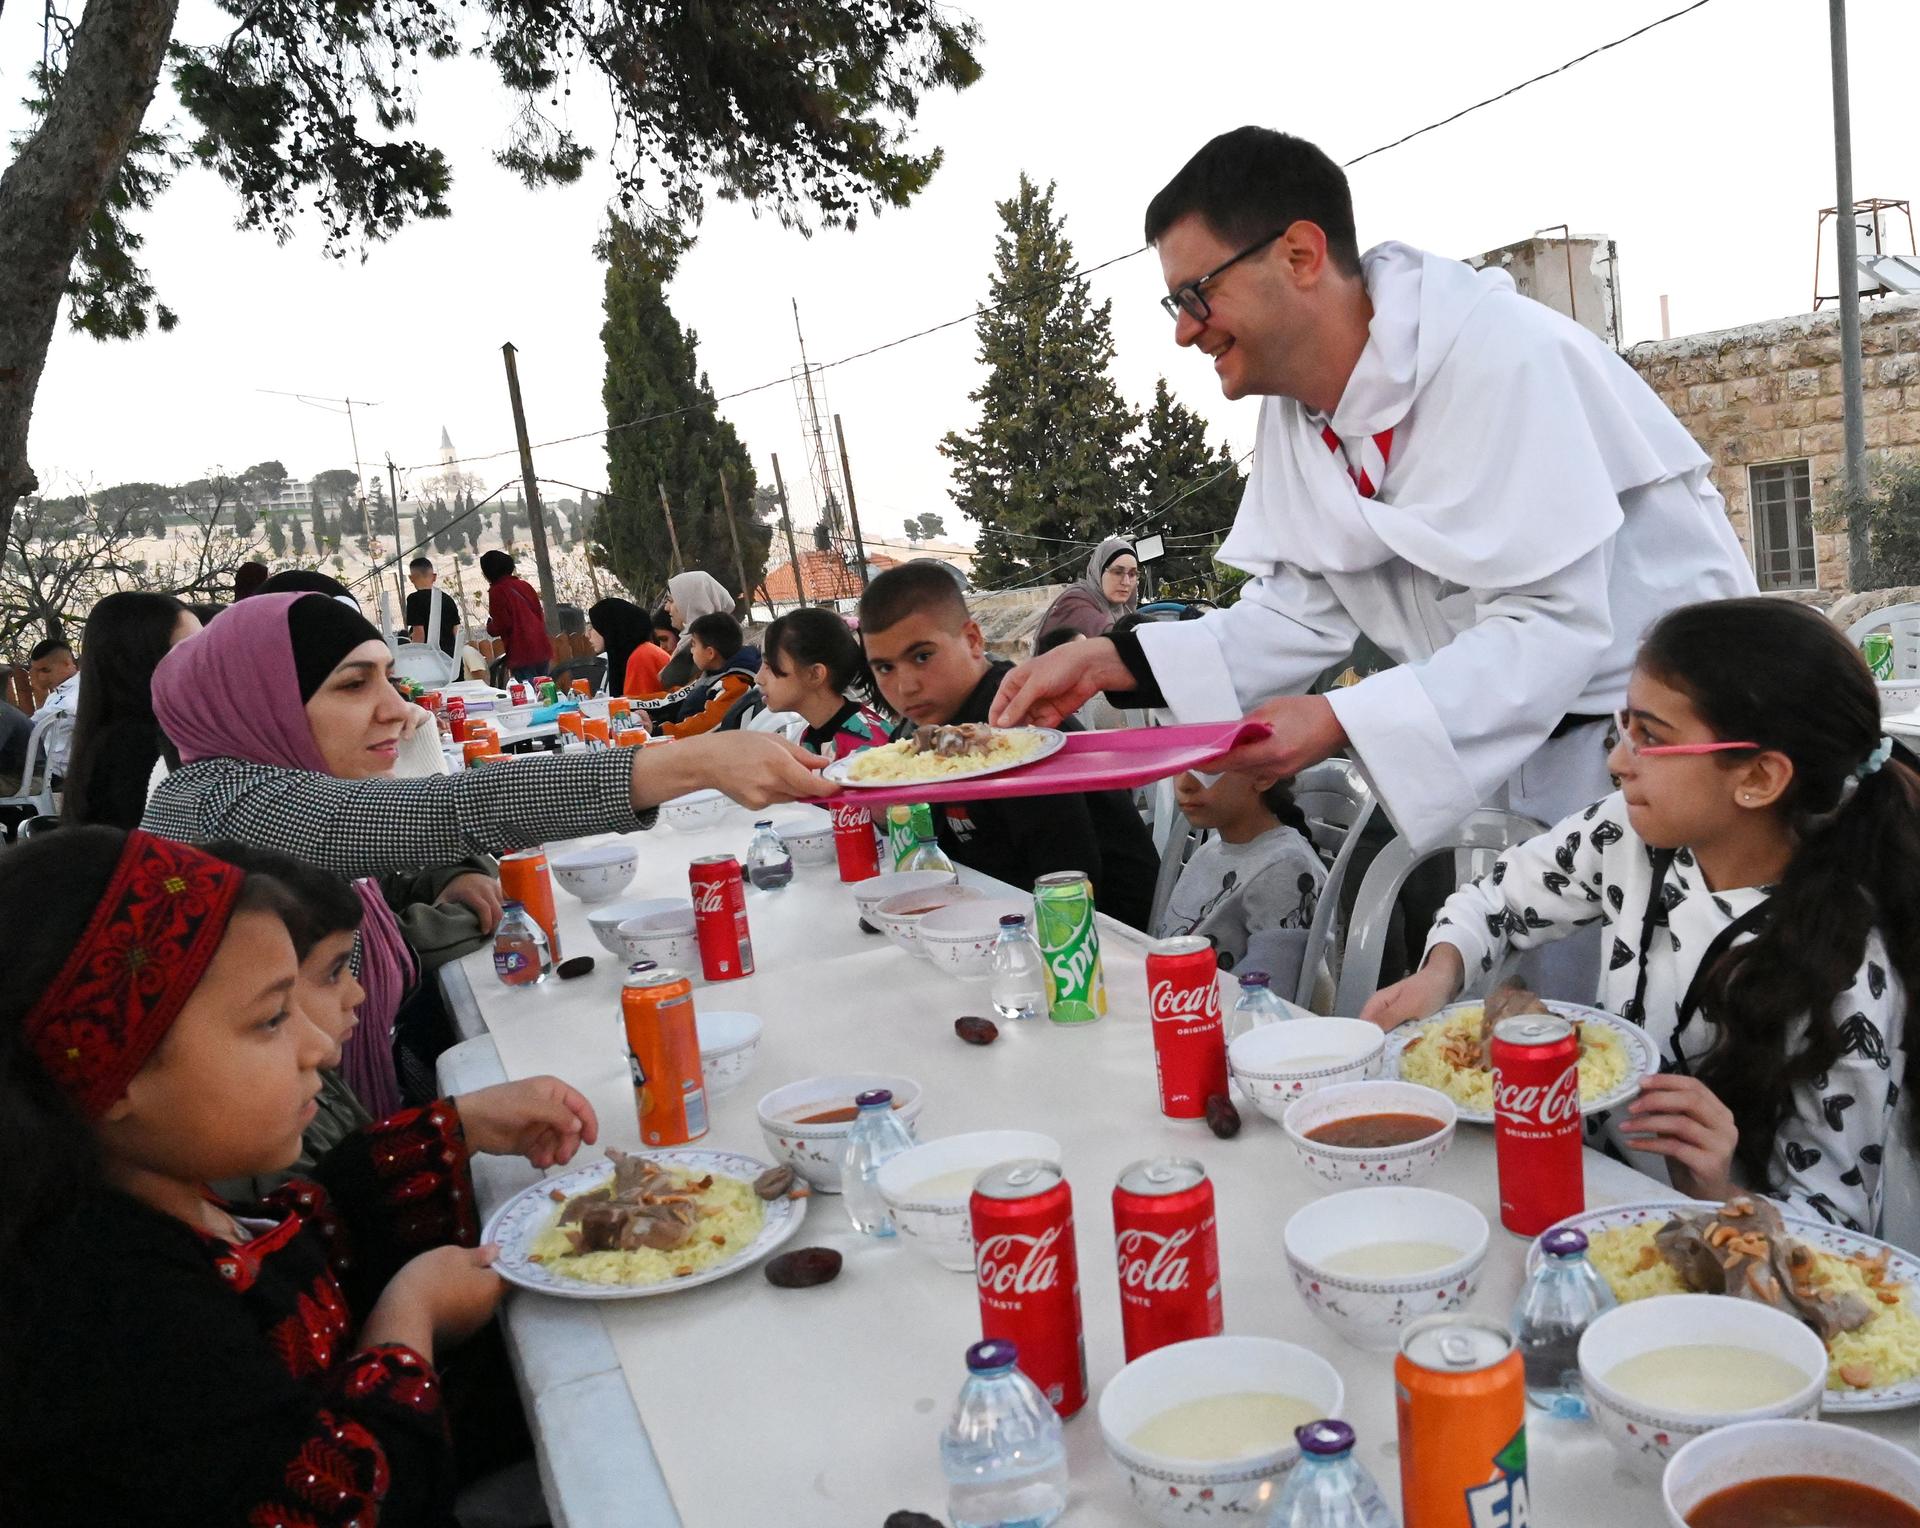 With iftar, Jerusalem Christians hope to be bridge to Muslim neighbors